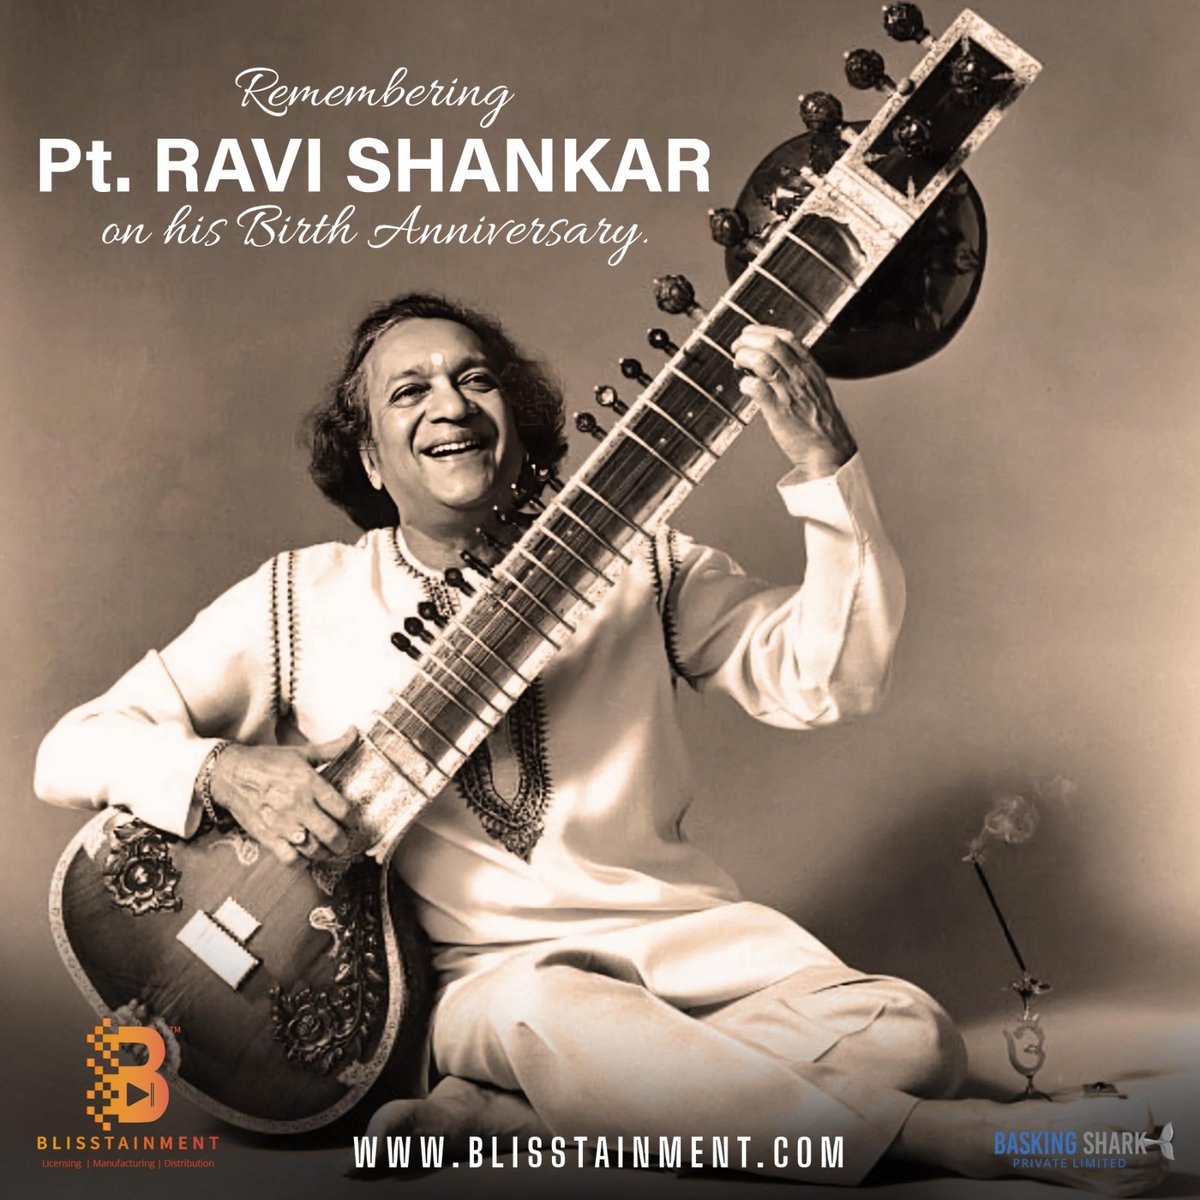 Today we pay tribute to the legendary Ravi Shankar on his birth anniversary. We are forever grateful for his contribution to Indian classical music. 
. 
. 
. 
#blisstainment #RaviShankar #IndianClassicalMusic #MusicLegend #BirthAnniversary #SitarMaestro #WorldMusic #SitarPlayer